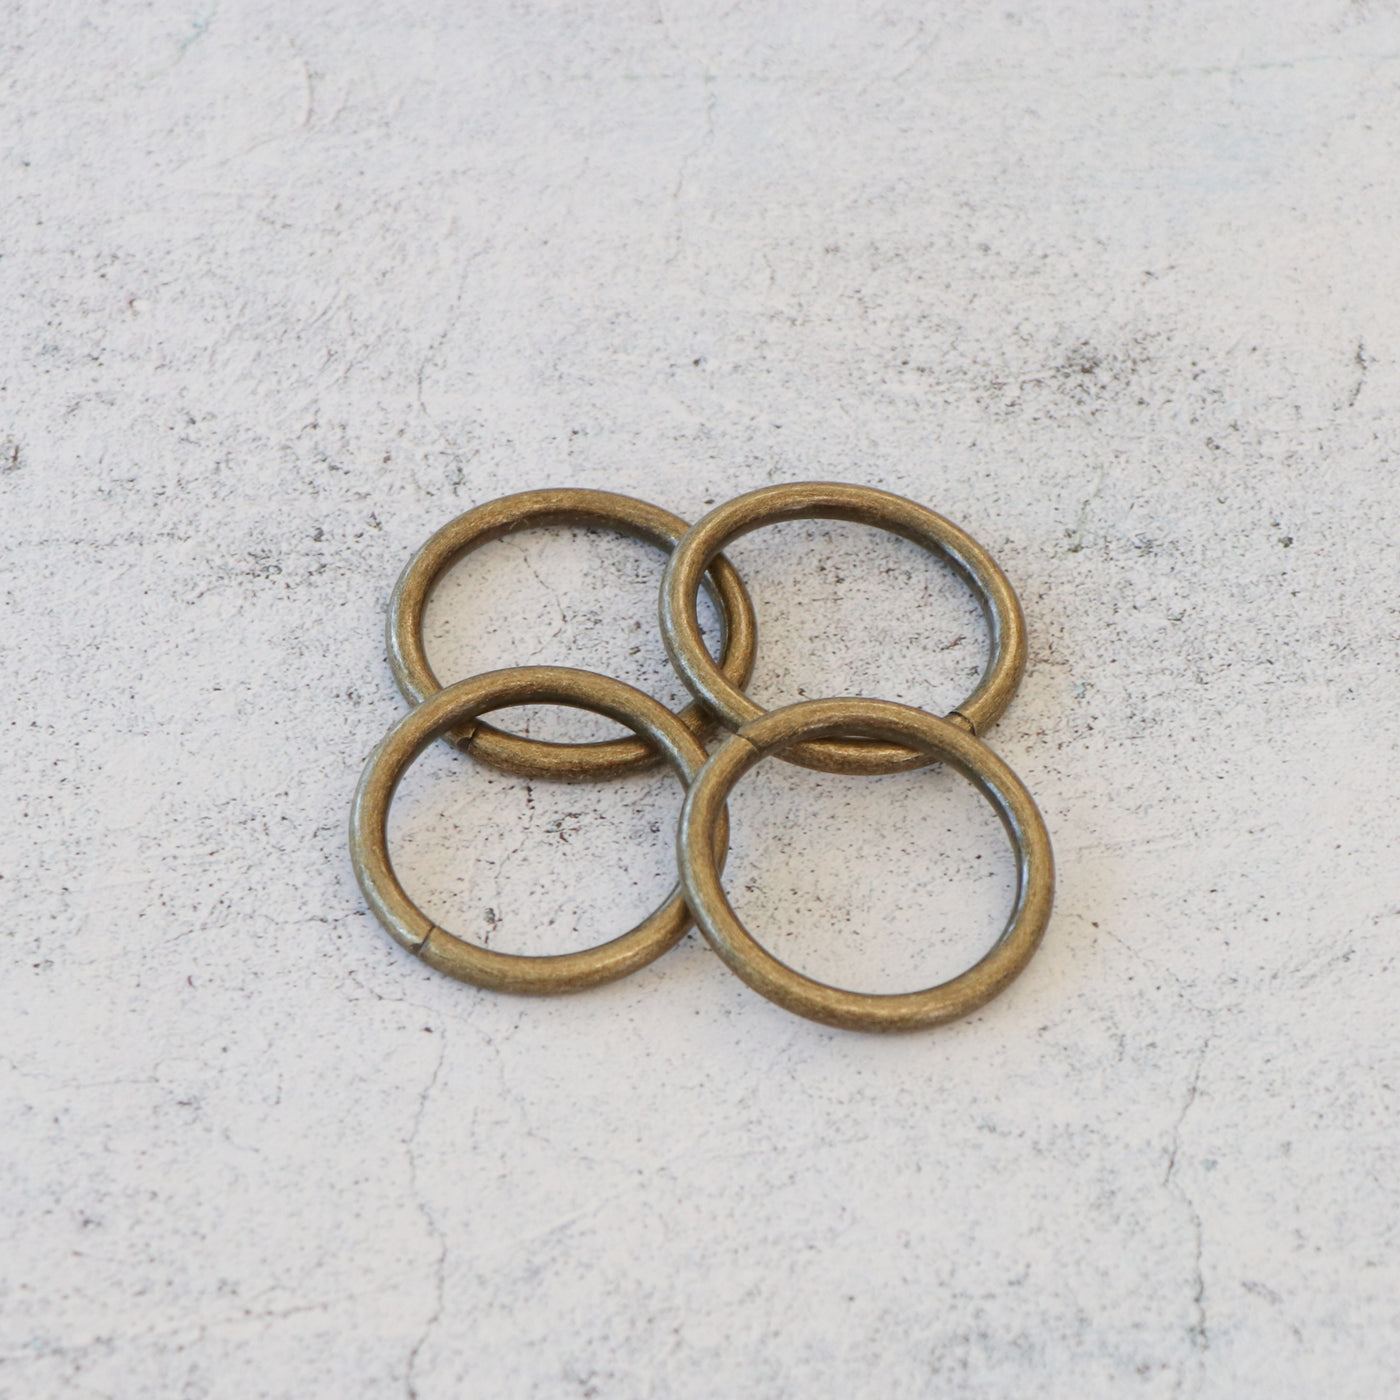 Four 1 1/2" O-Rings